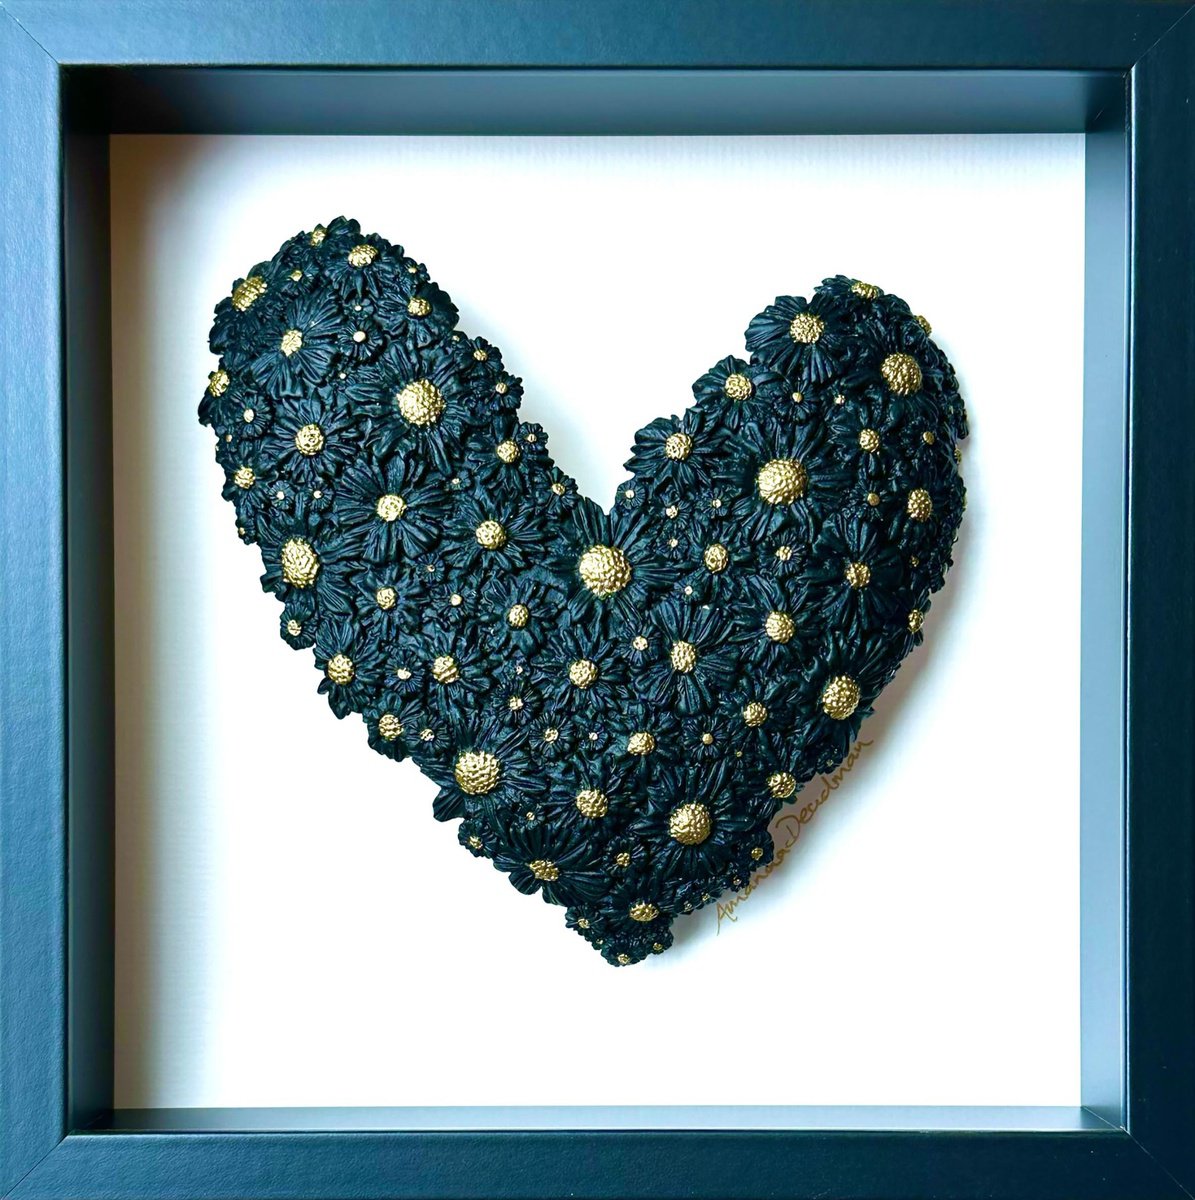 As Fresh as a Daisy (Black polymer clay heart with gold) by Amanda Deadman